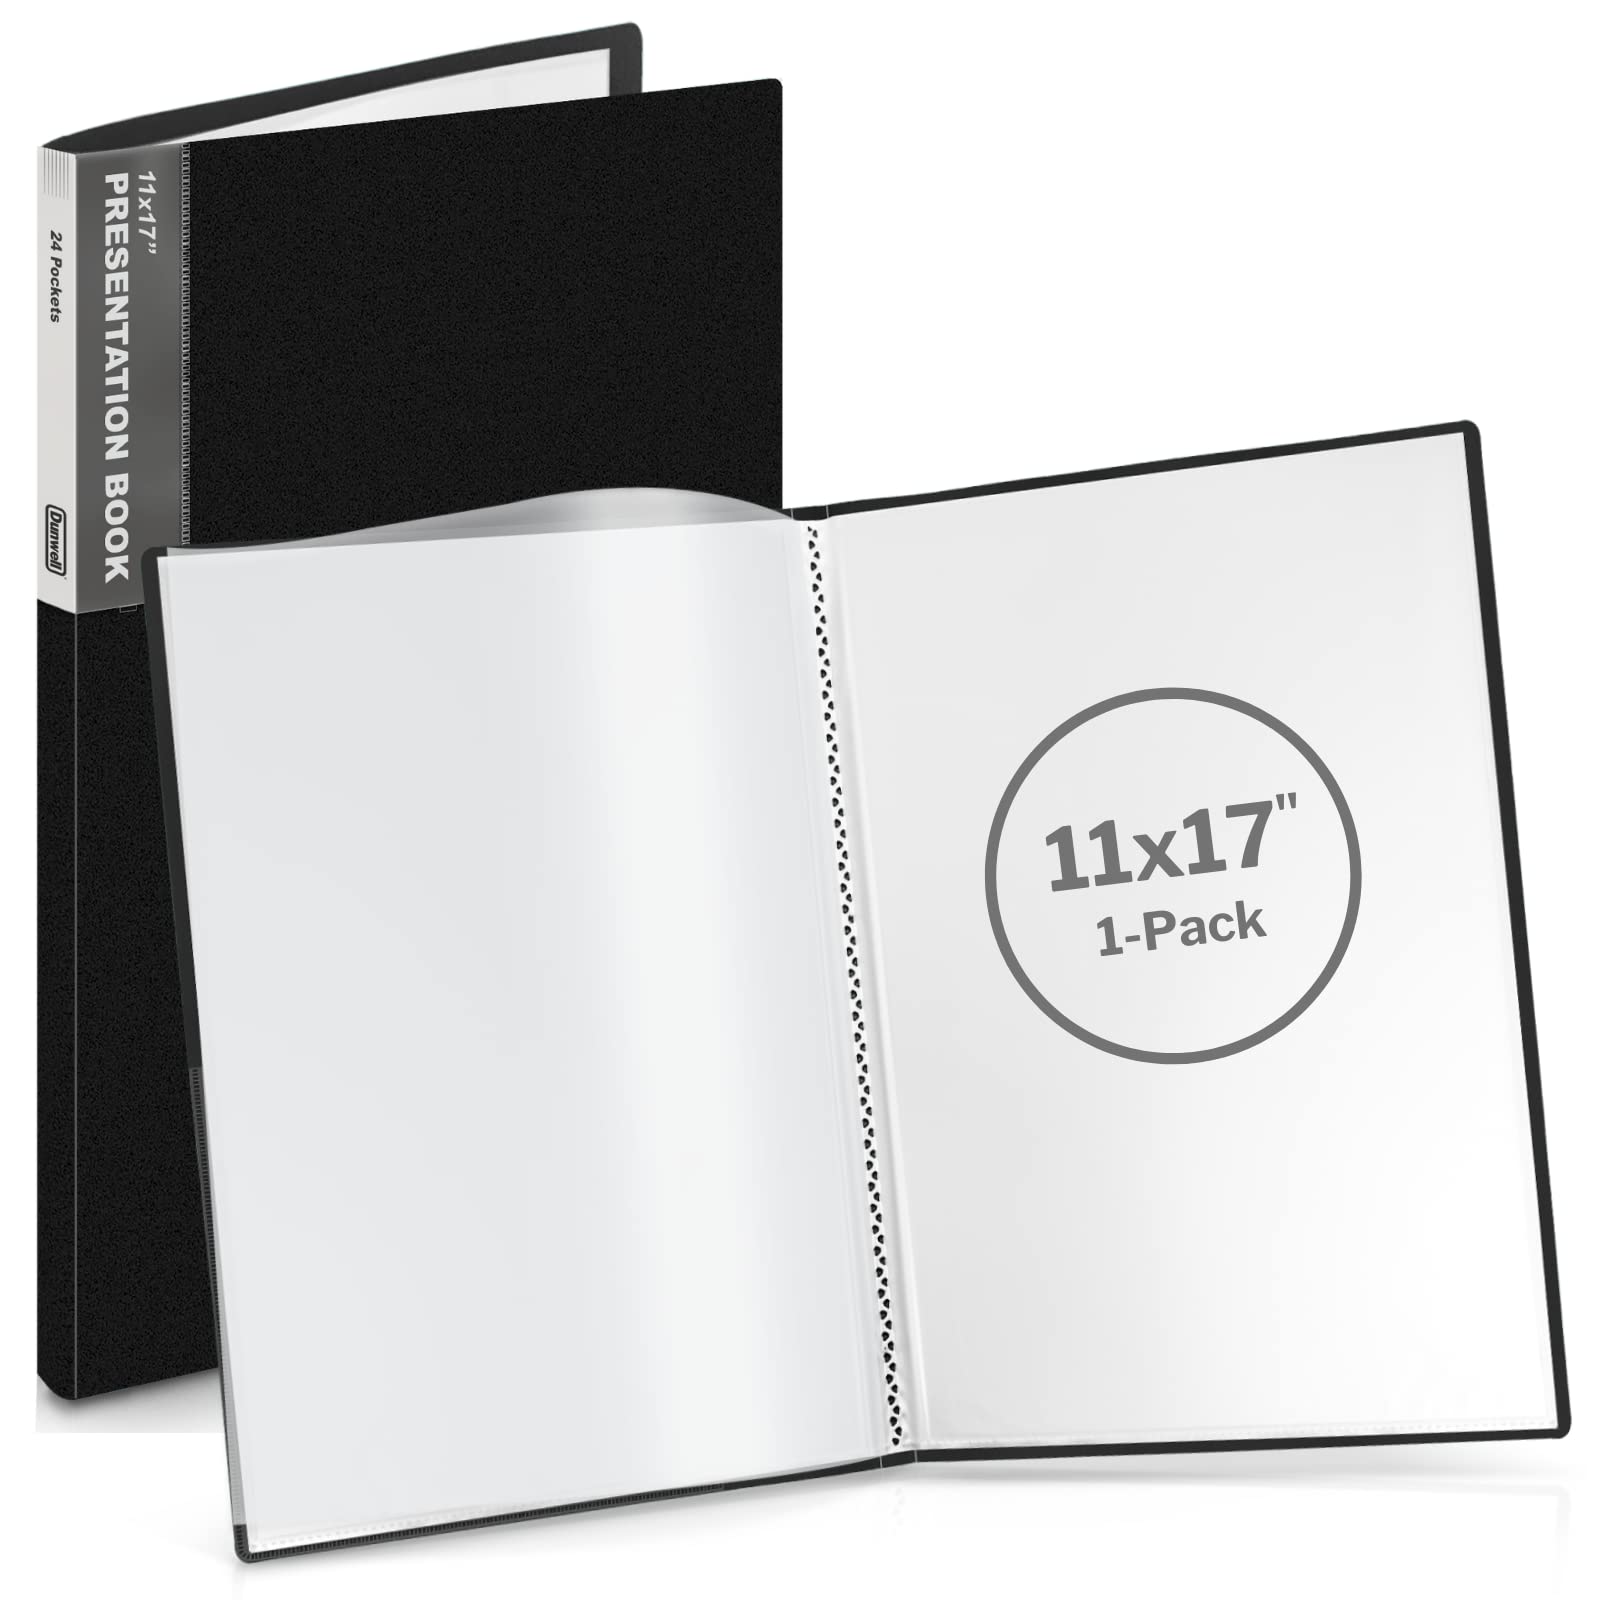 Dunwell Art Portfolio Binder 8.5x11 - (Black) Portfolio Folder for